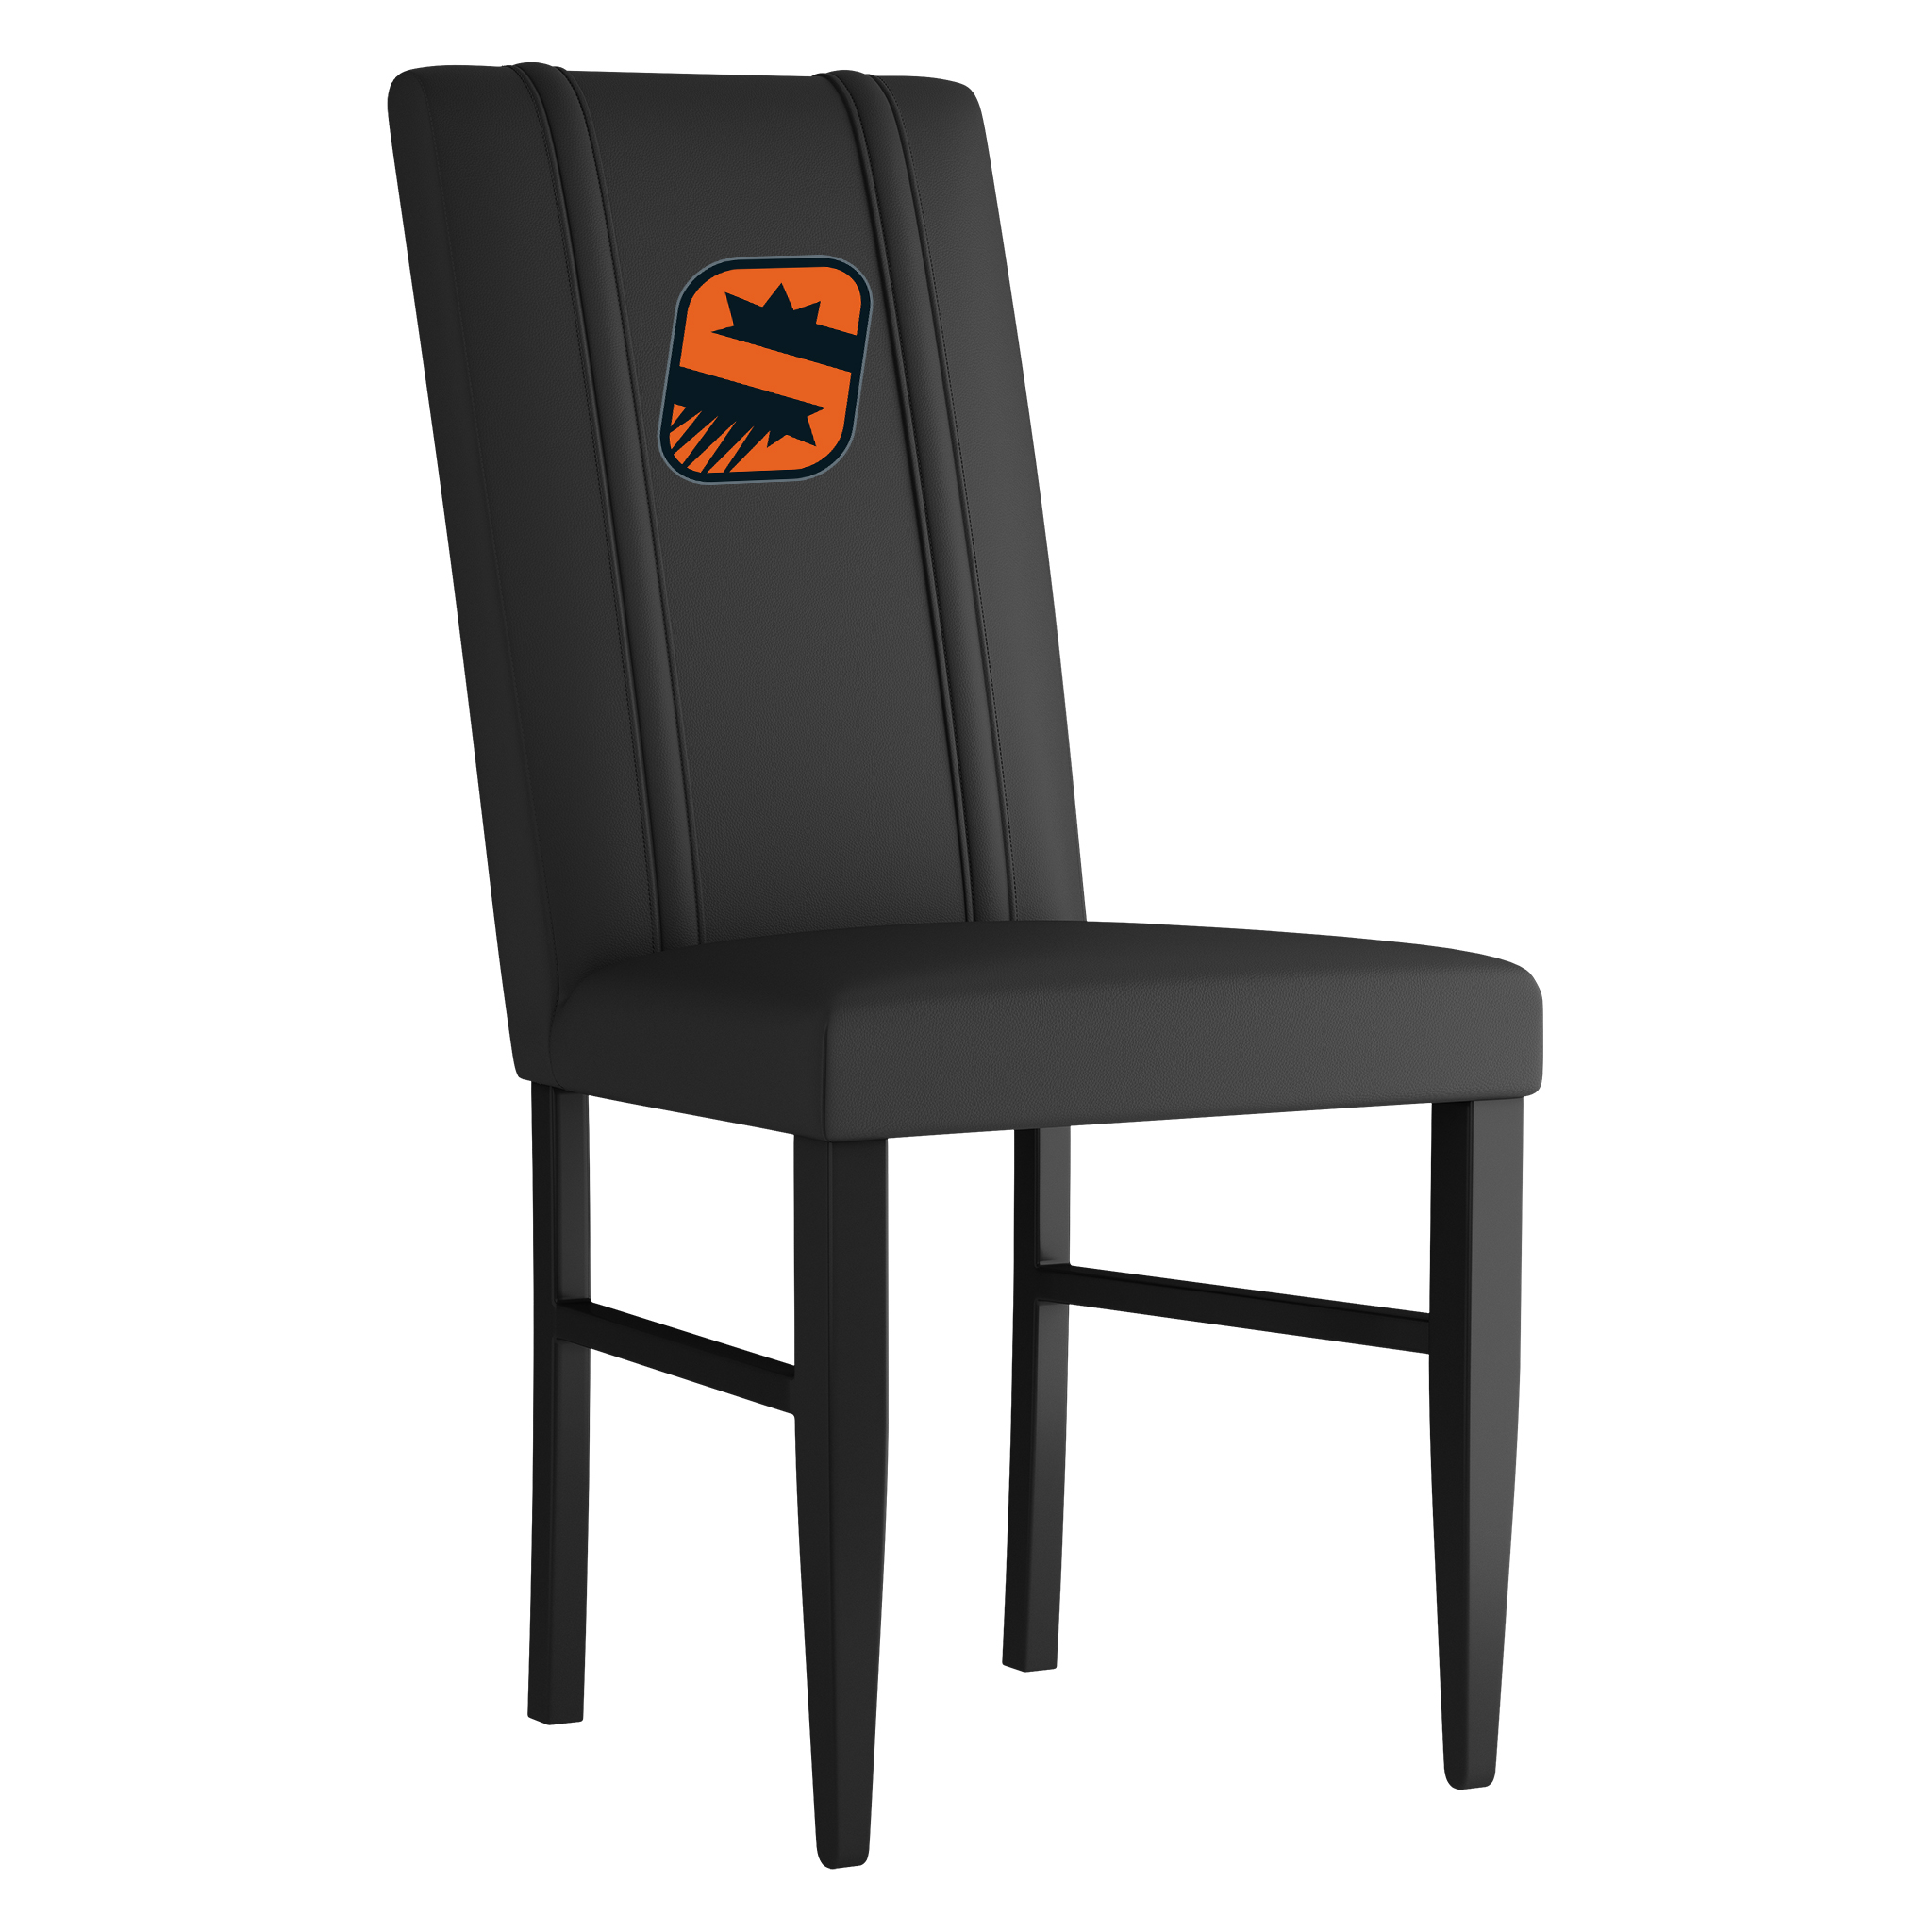 Phoenix Suns Side Chair 2000 With Phoenix Suns S